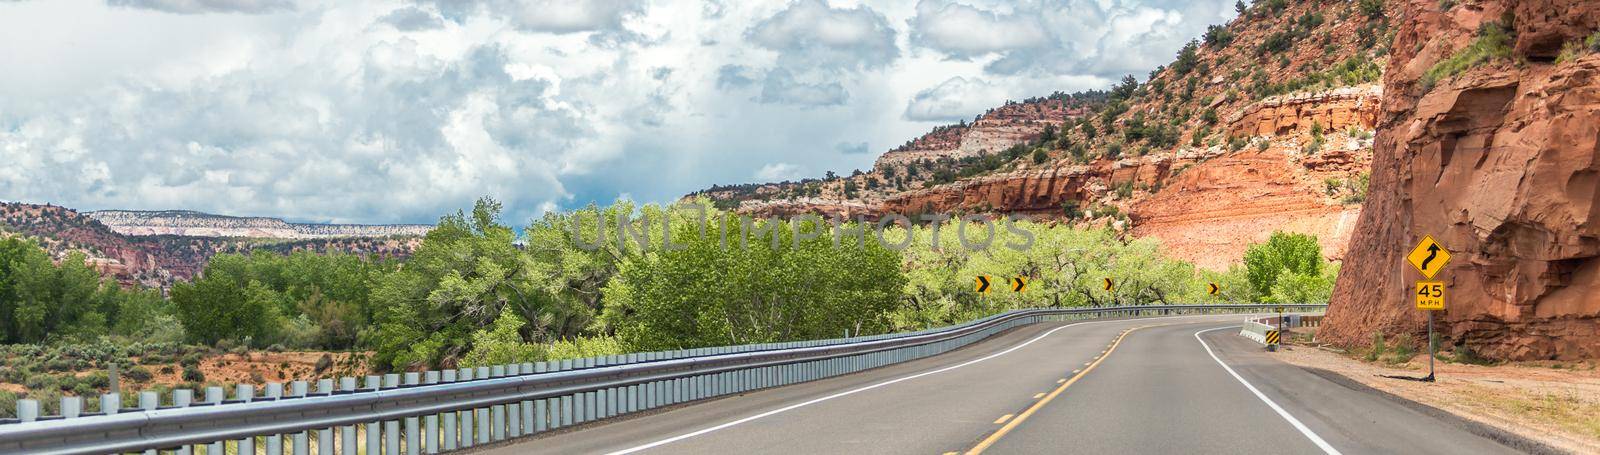 Beautifil Highway in Utah landscape in USA